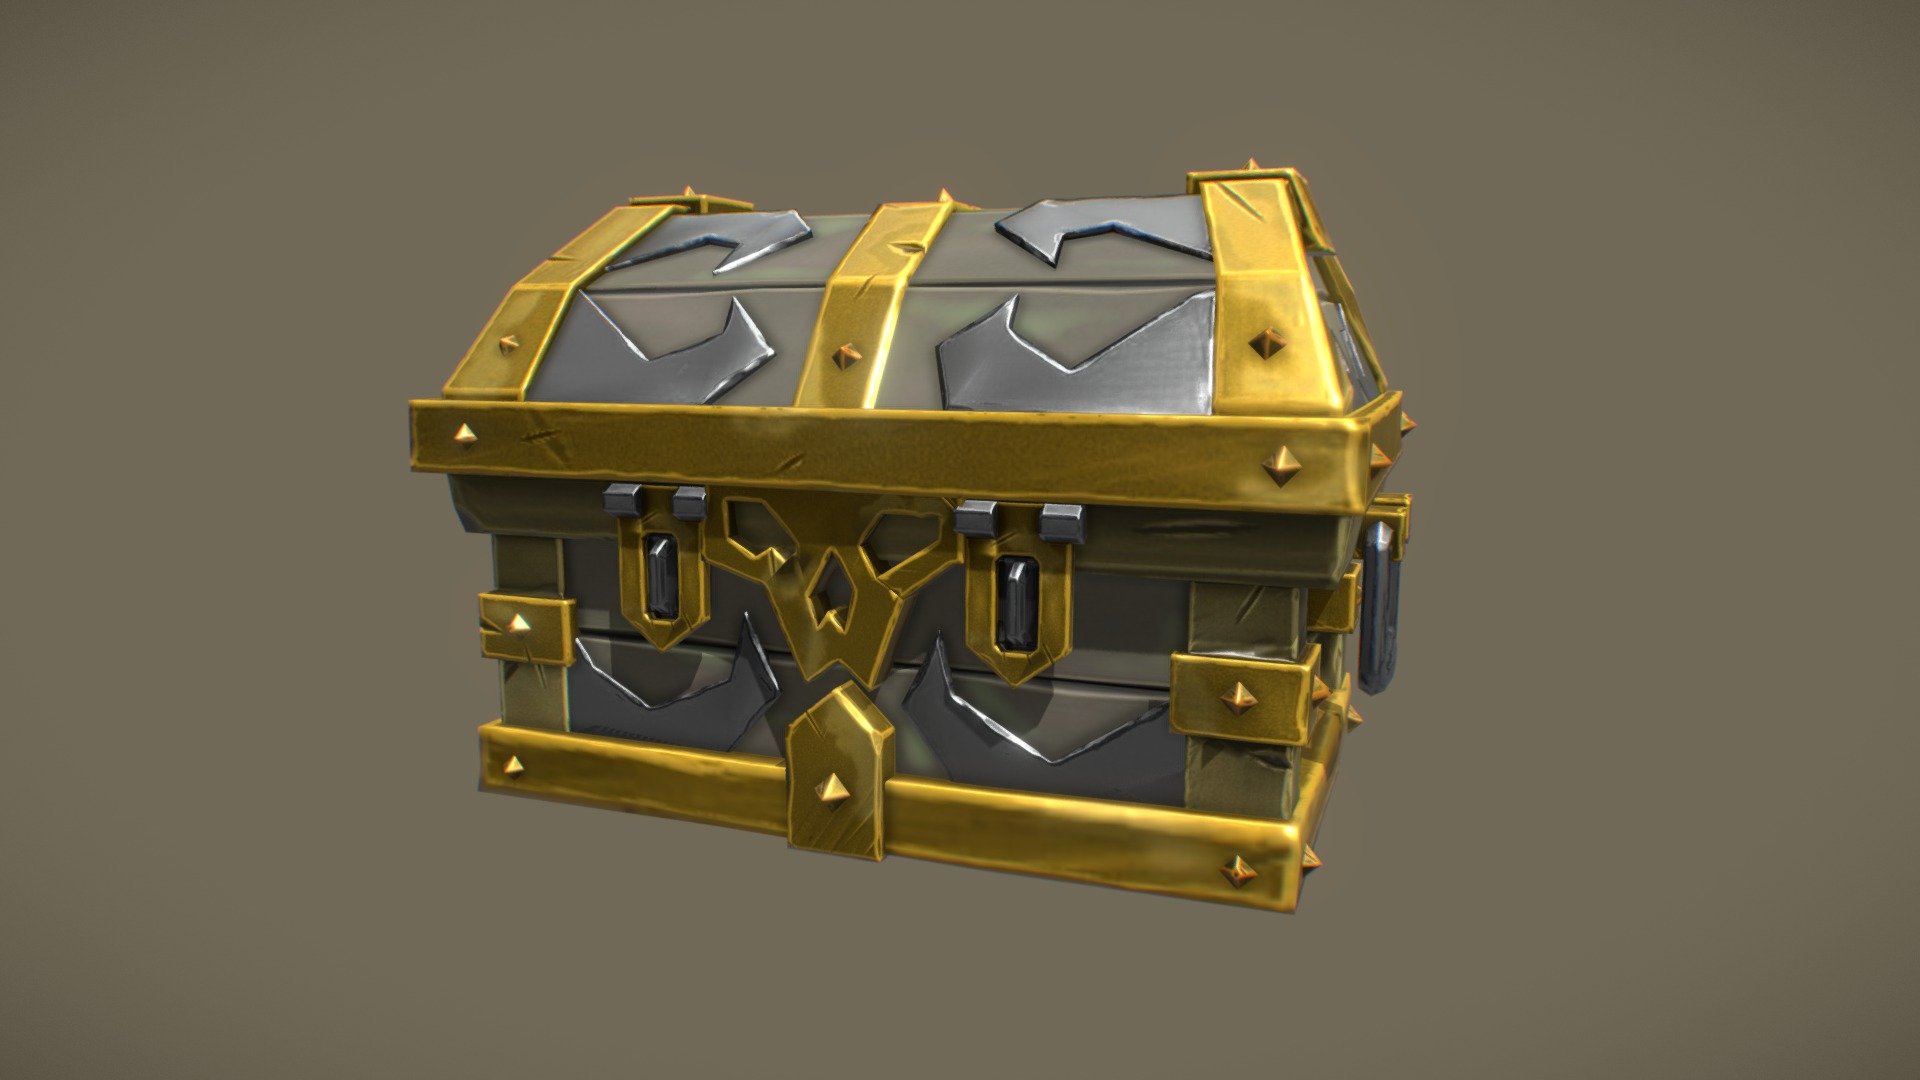 Sea of thieves fan chest - 3D model by jackula 3d model